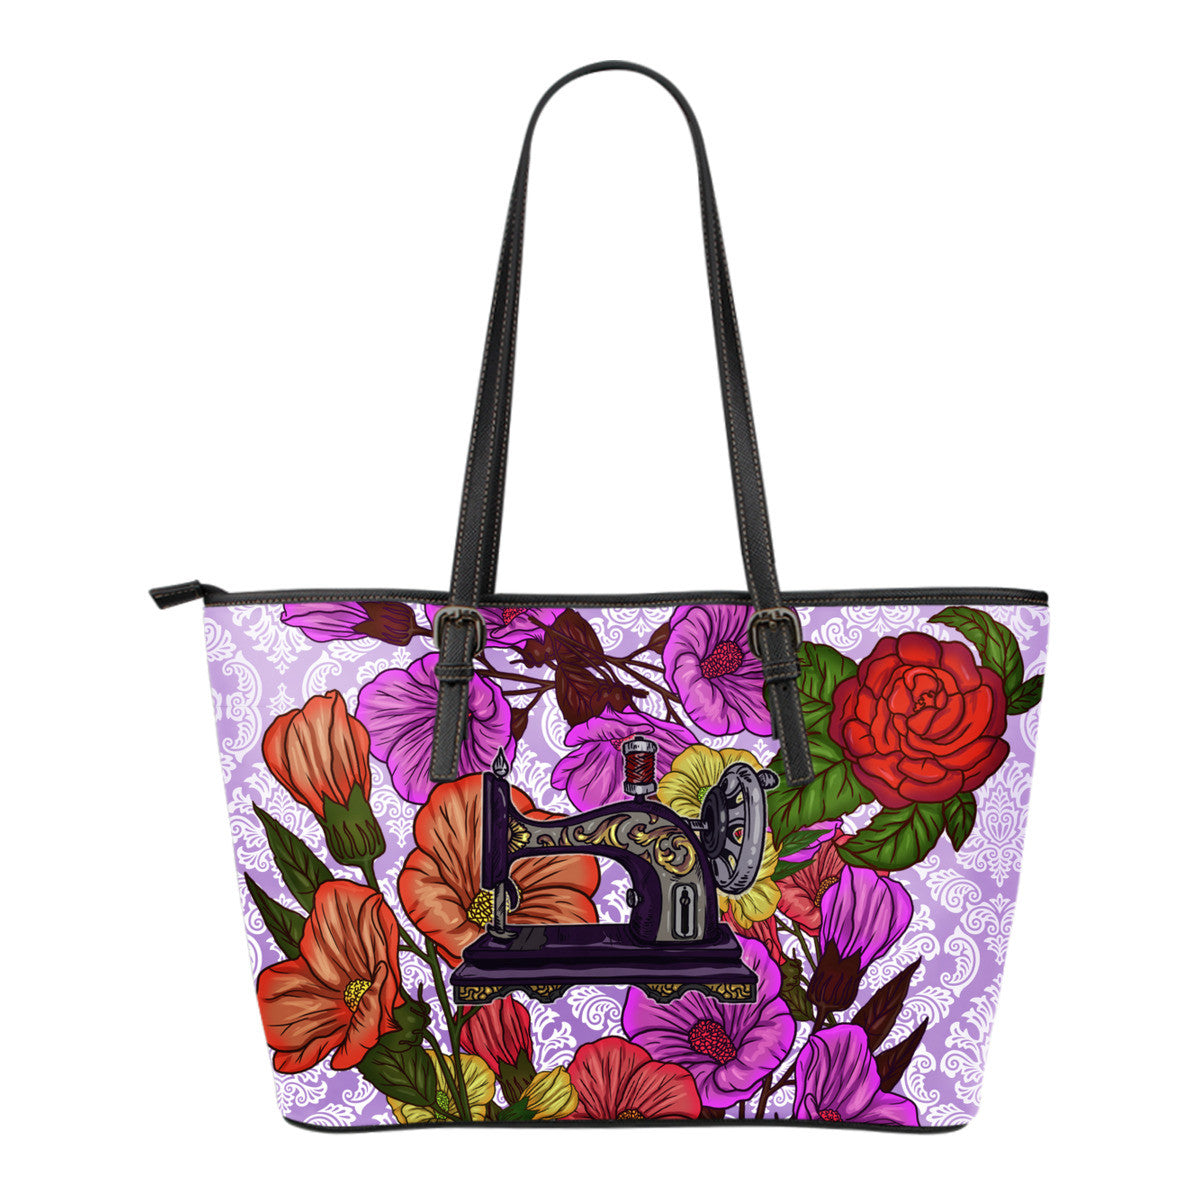 Sewing Machine Floral Tote Bag